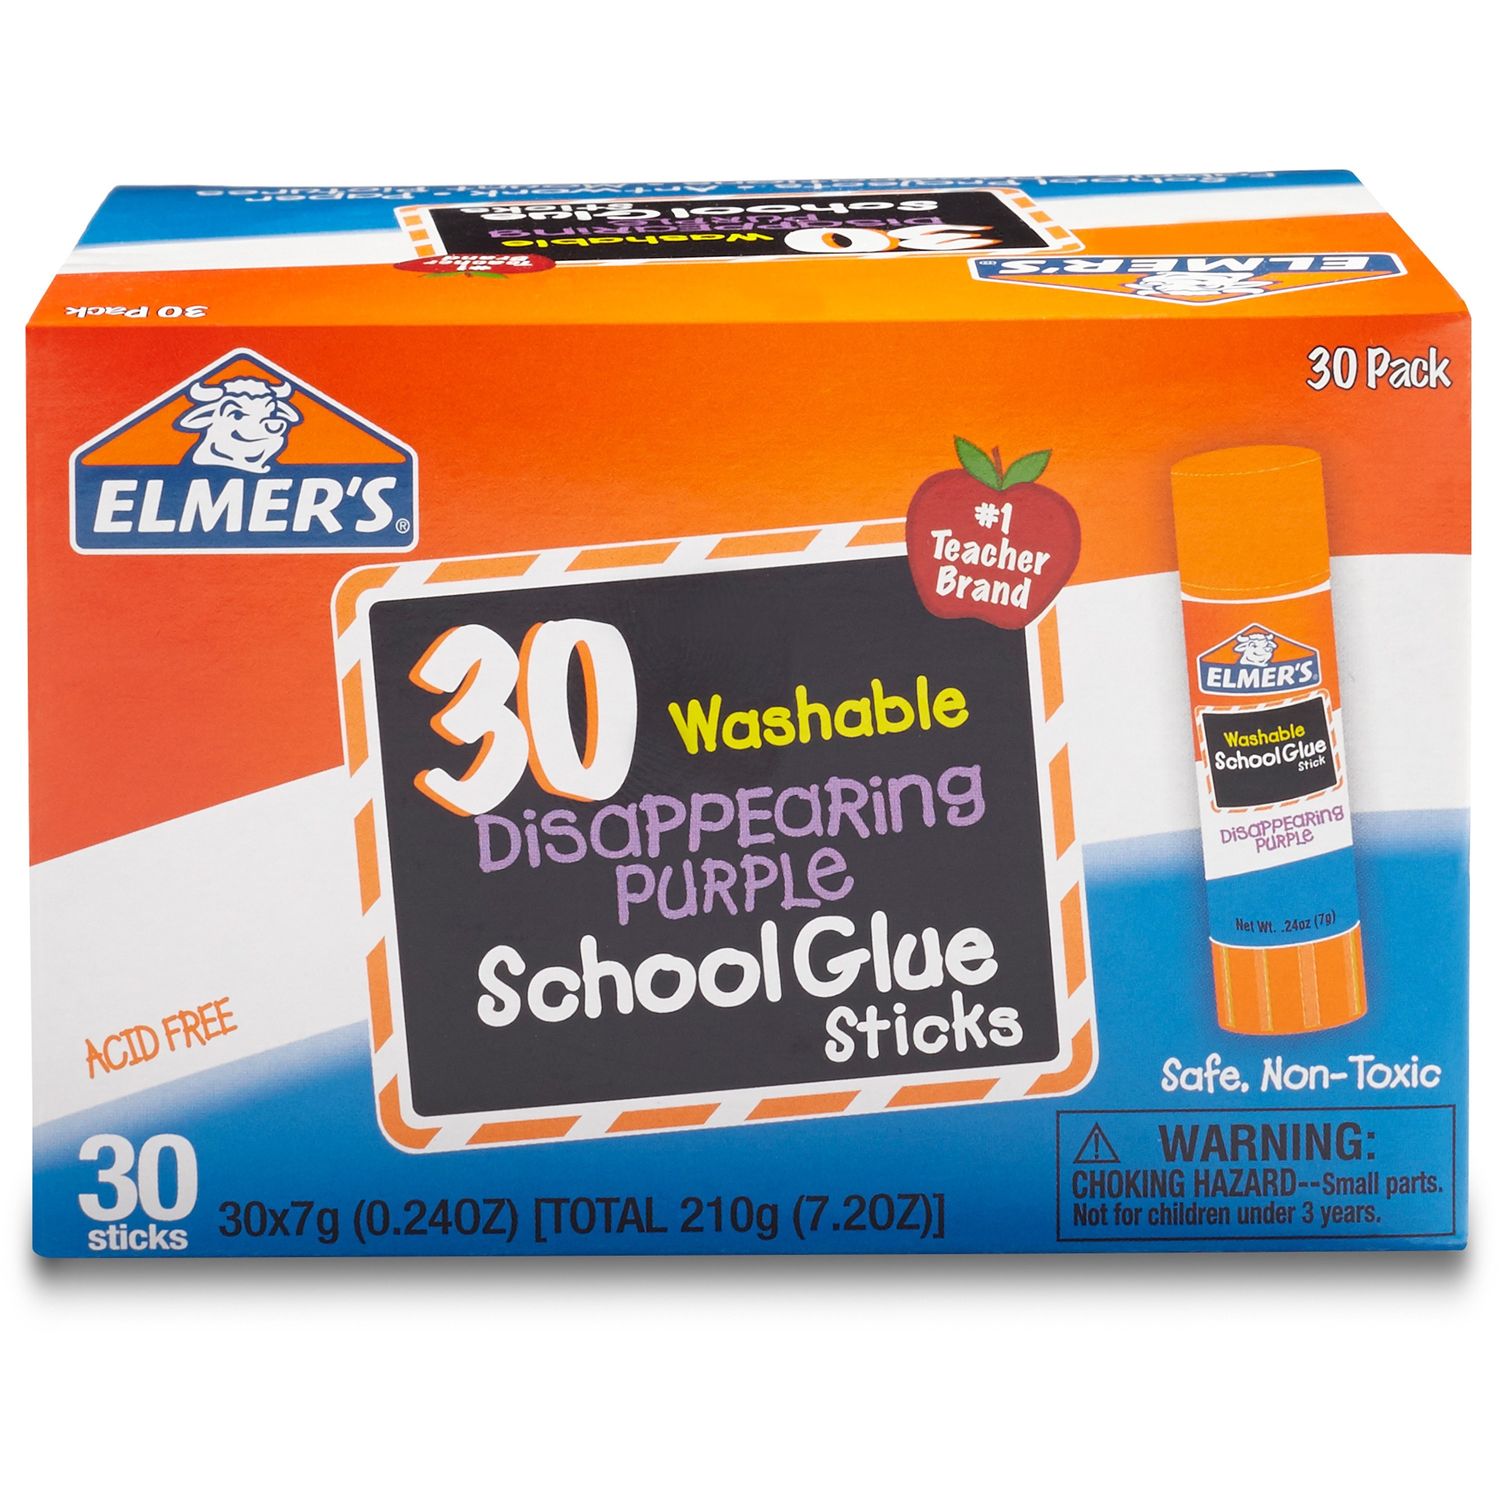 Elmer's Washable School Glue Stick, Disappearing Purple